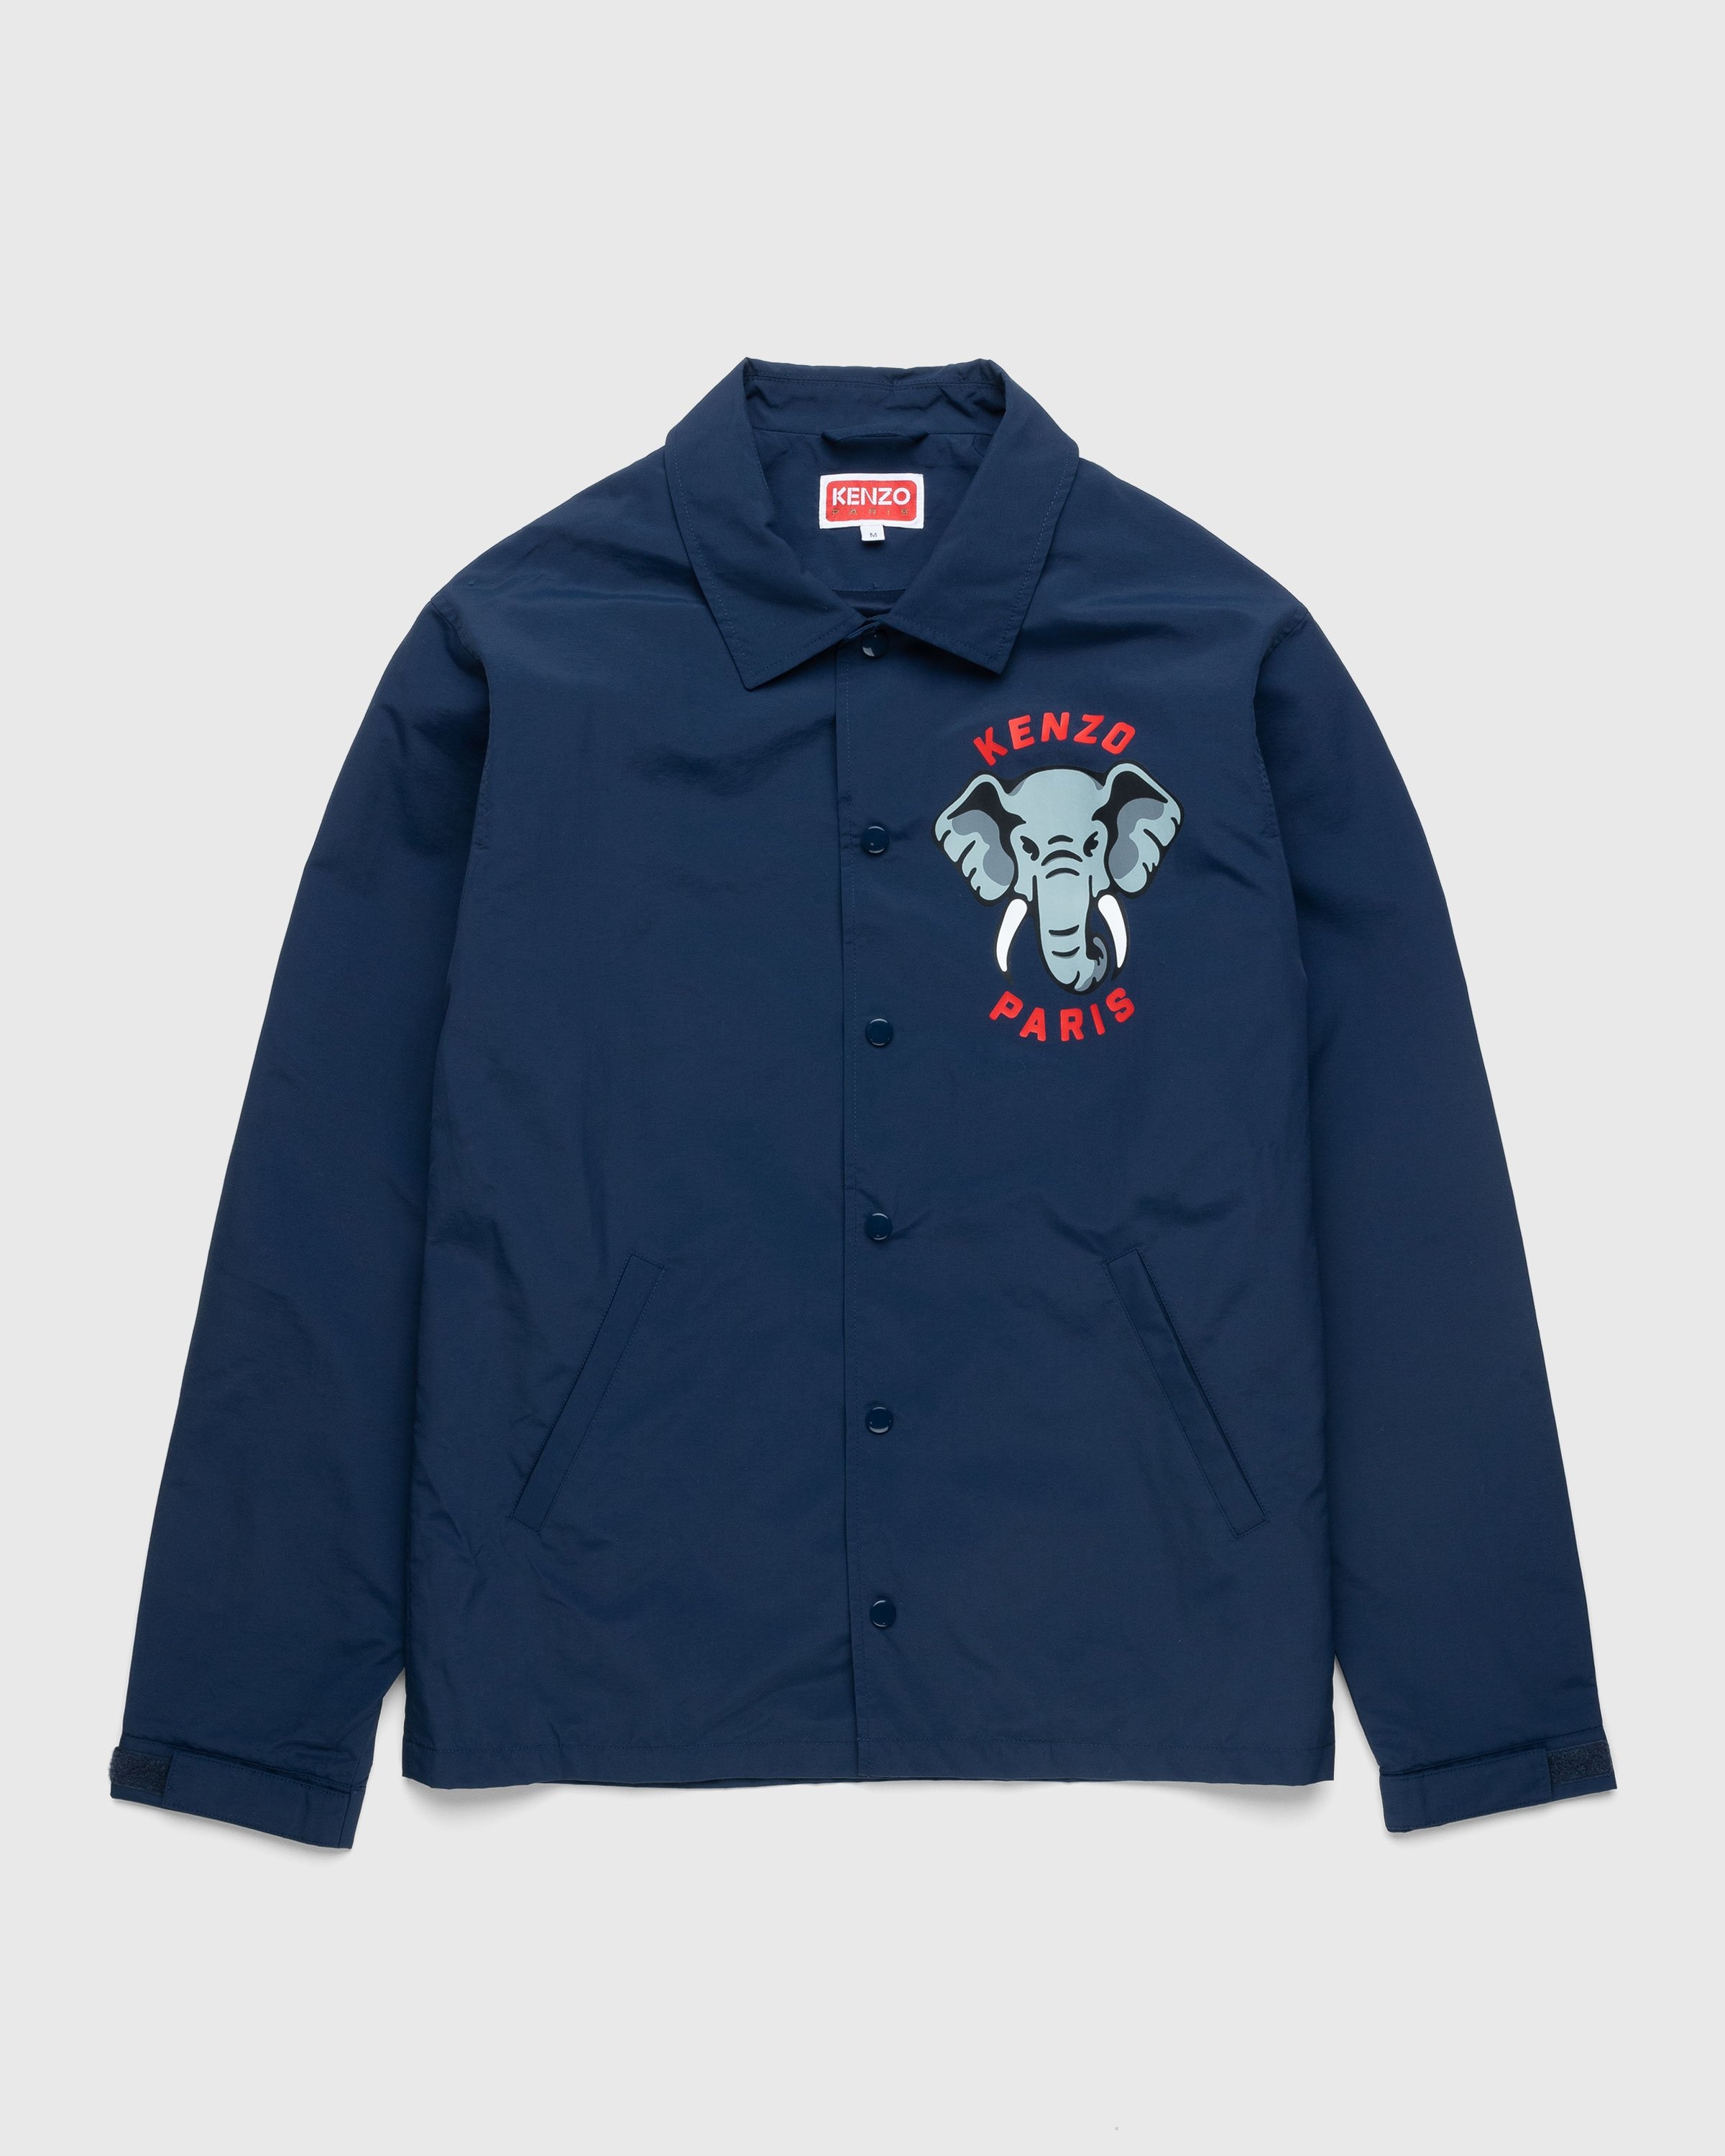 Kenzo – Elephant Coach Jacket Midnight Blue - Outerwear - Blue - Image 1